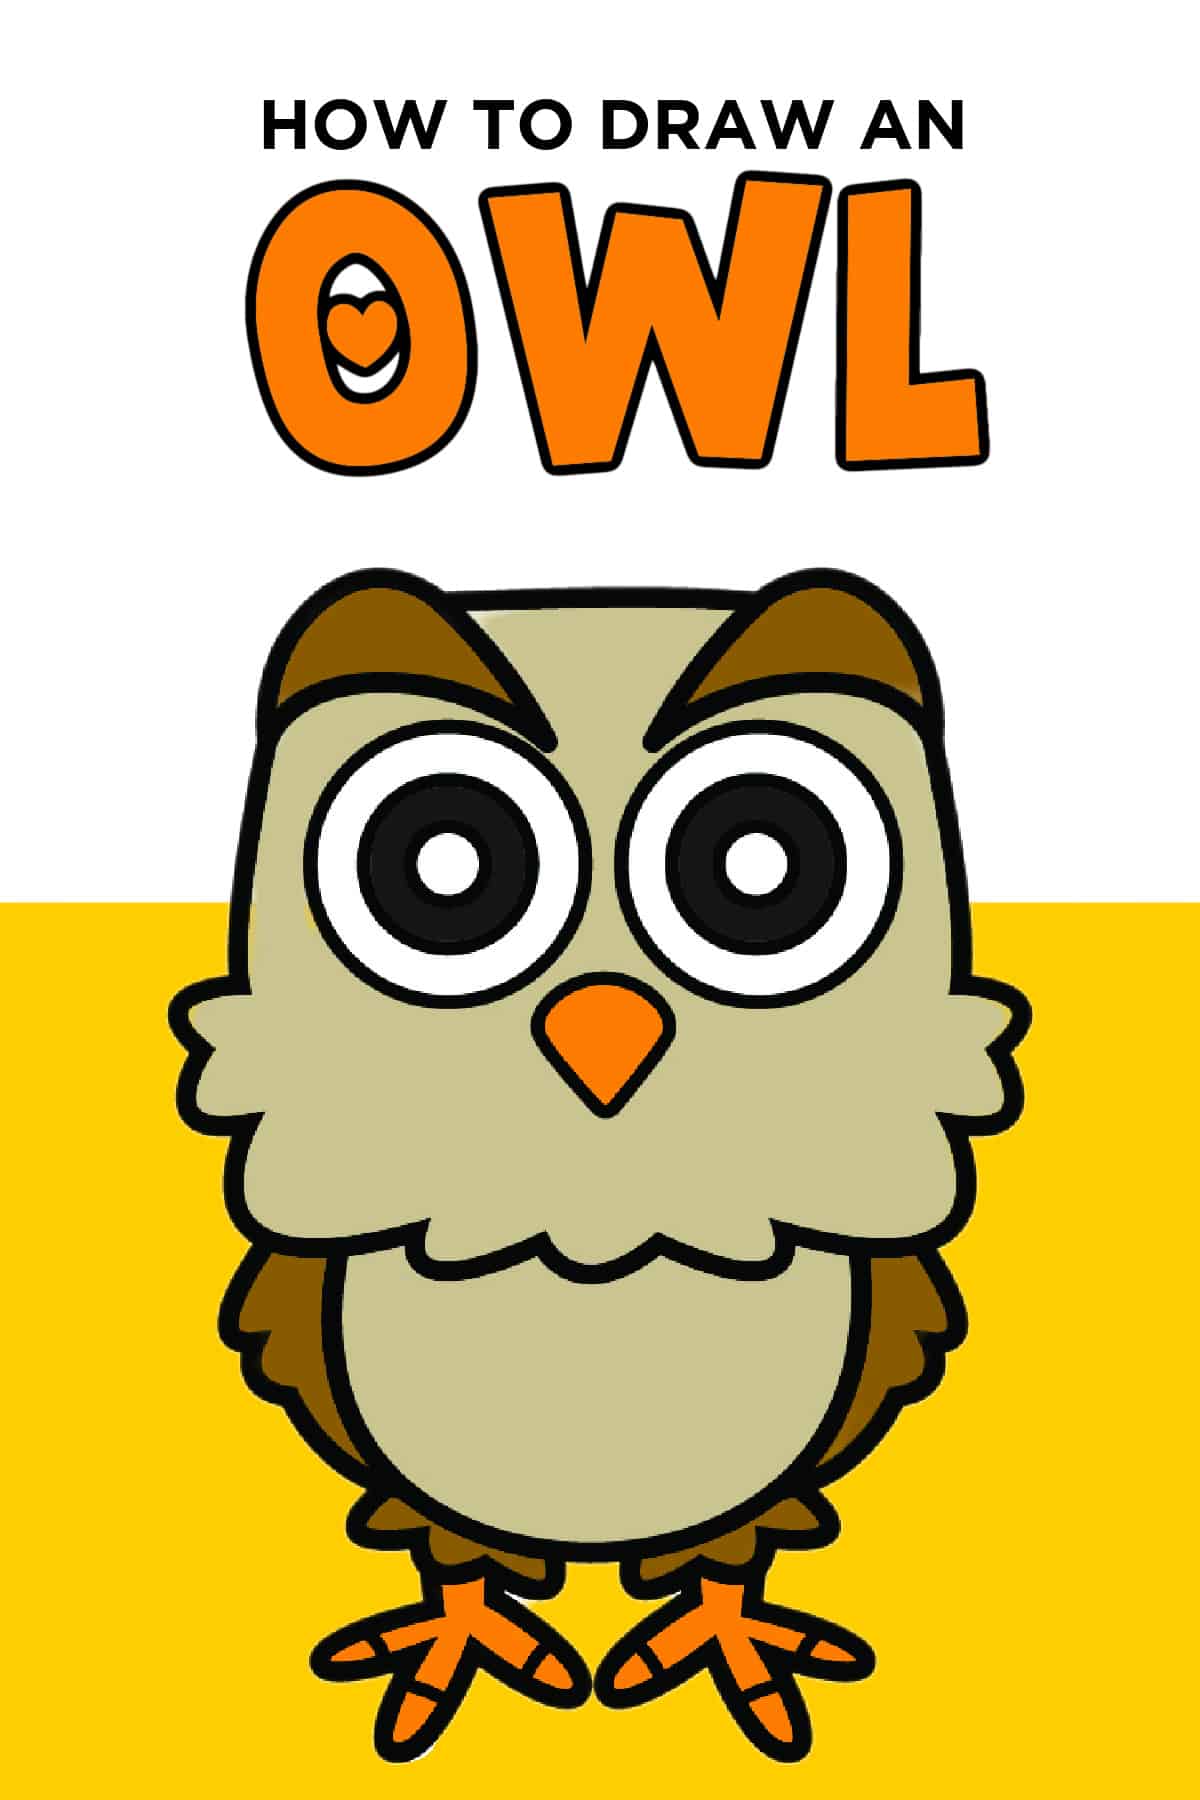 How to Draw an Owl with Free Tutorial Sheet - Chalkola - Chalkola Art Supply